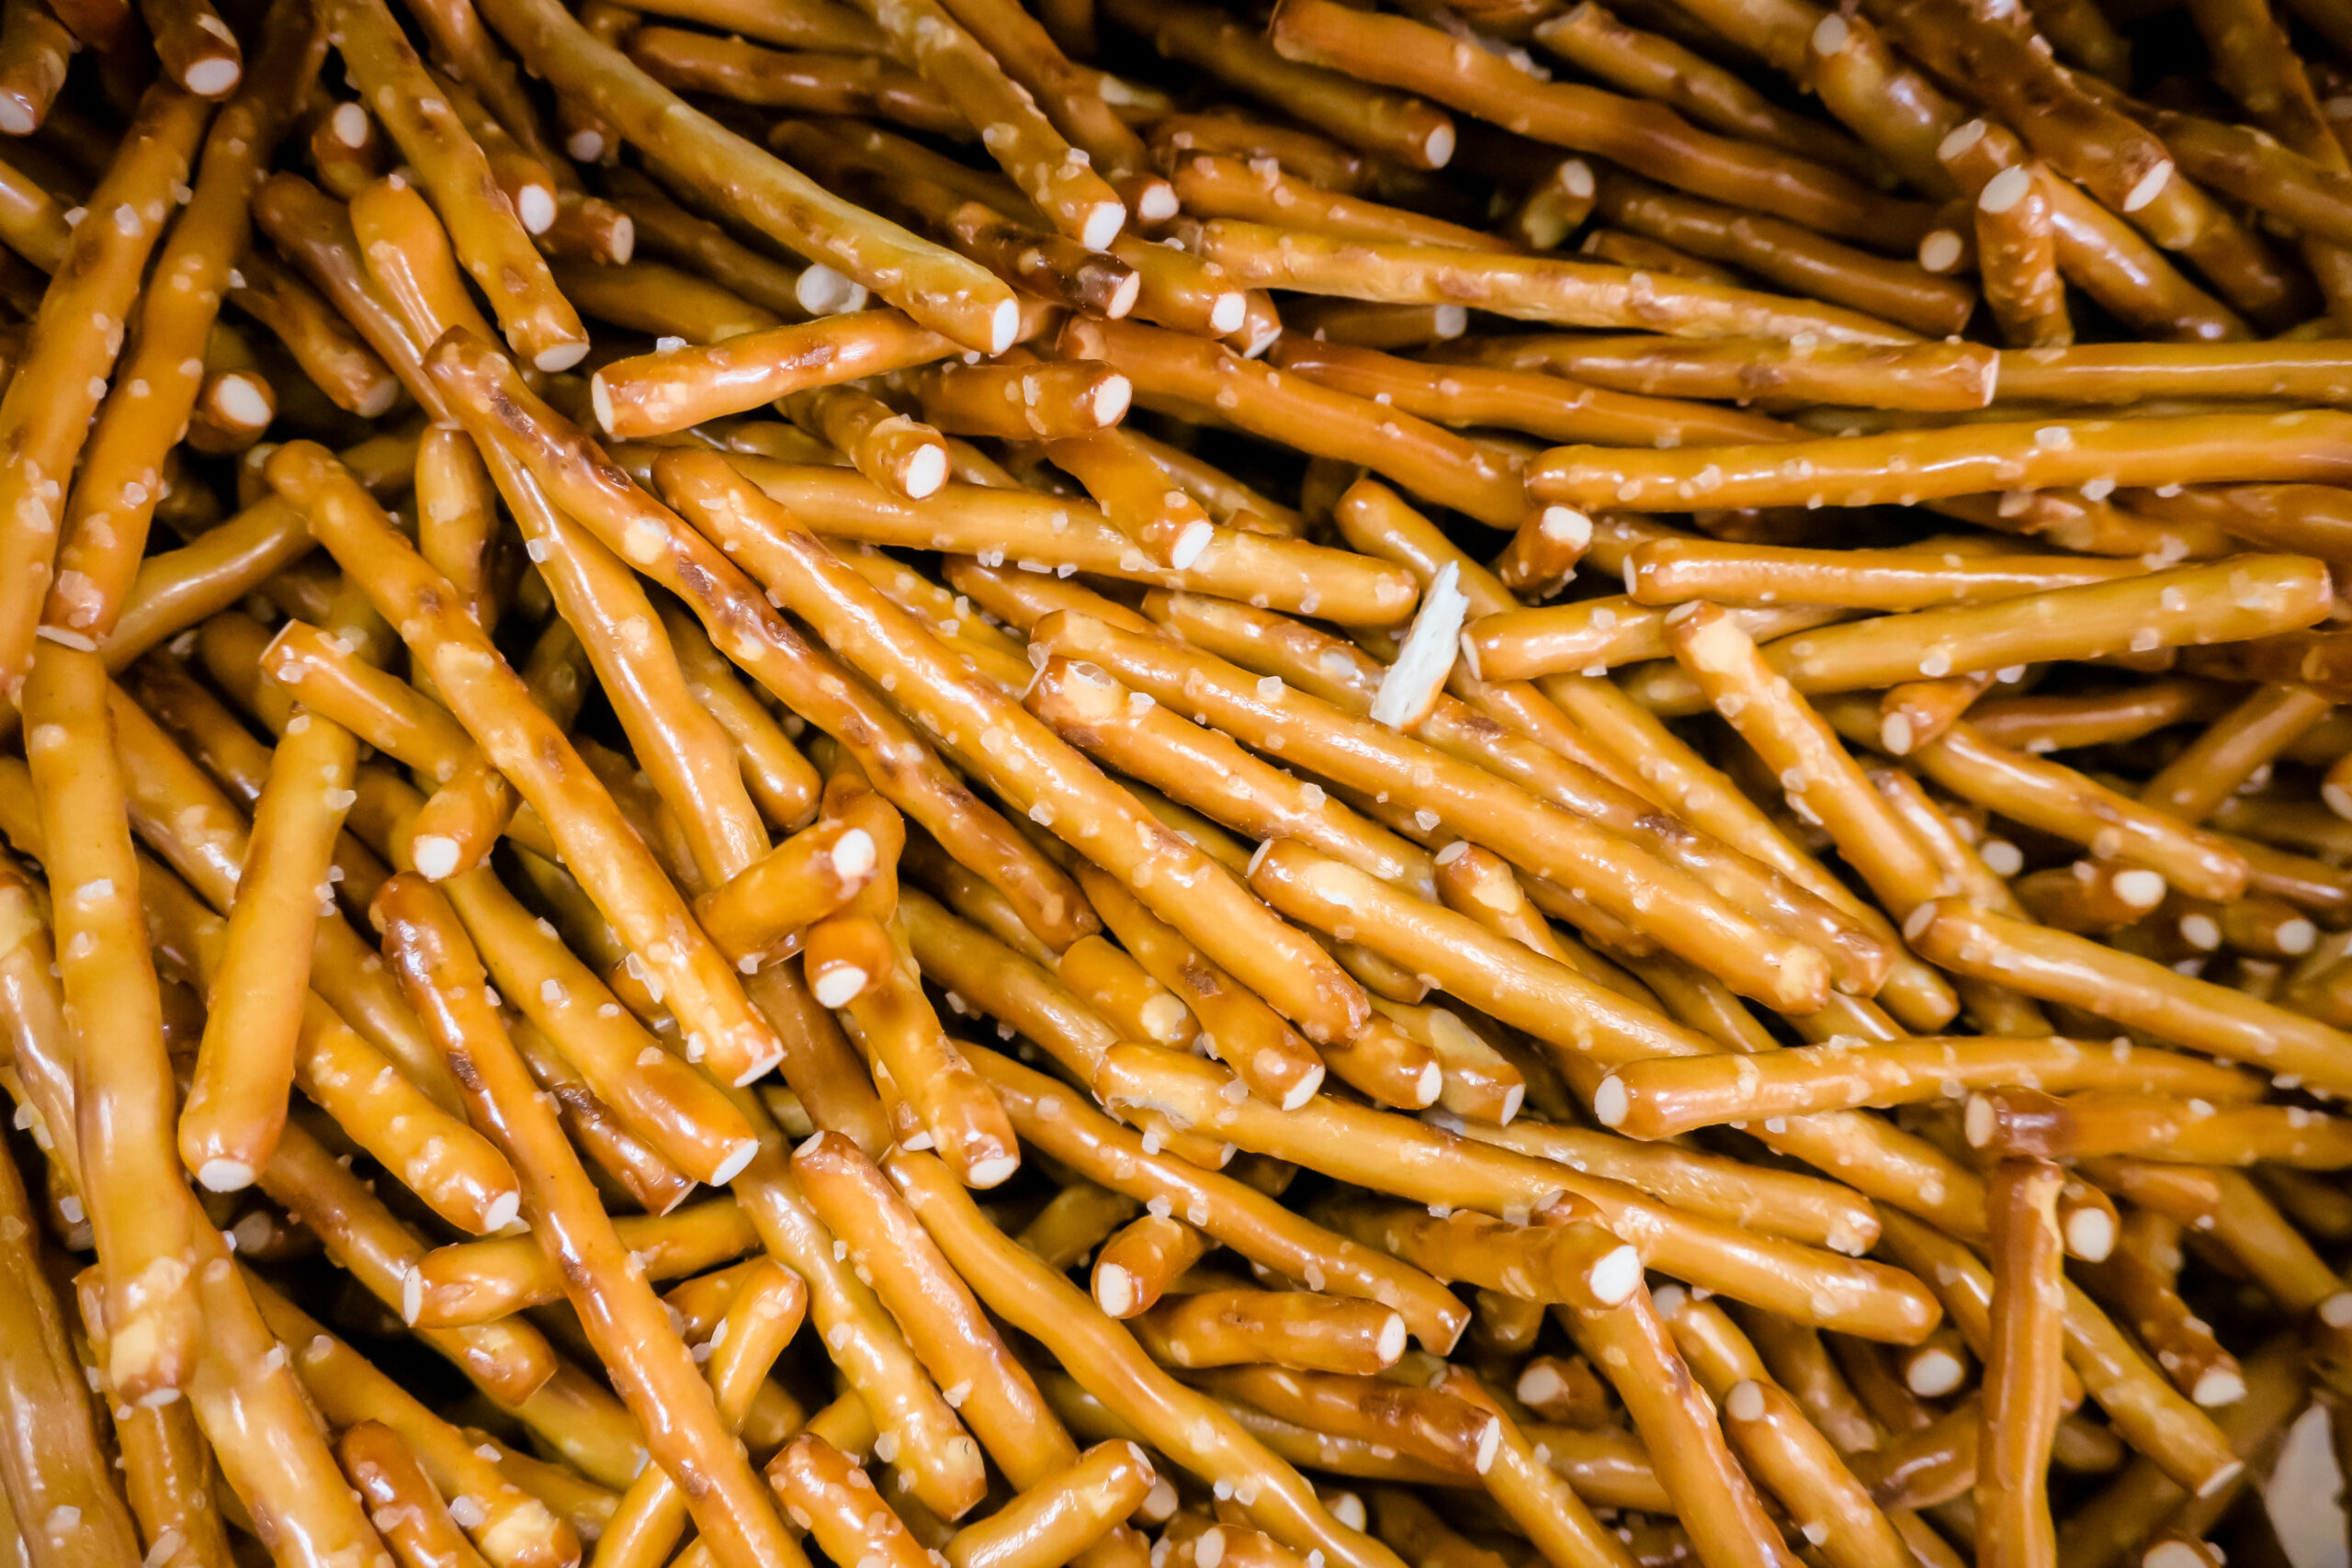 A pile of stick pretzels